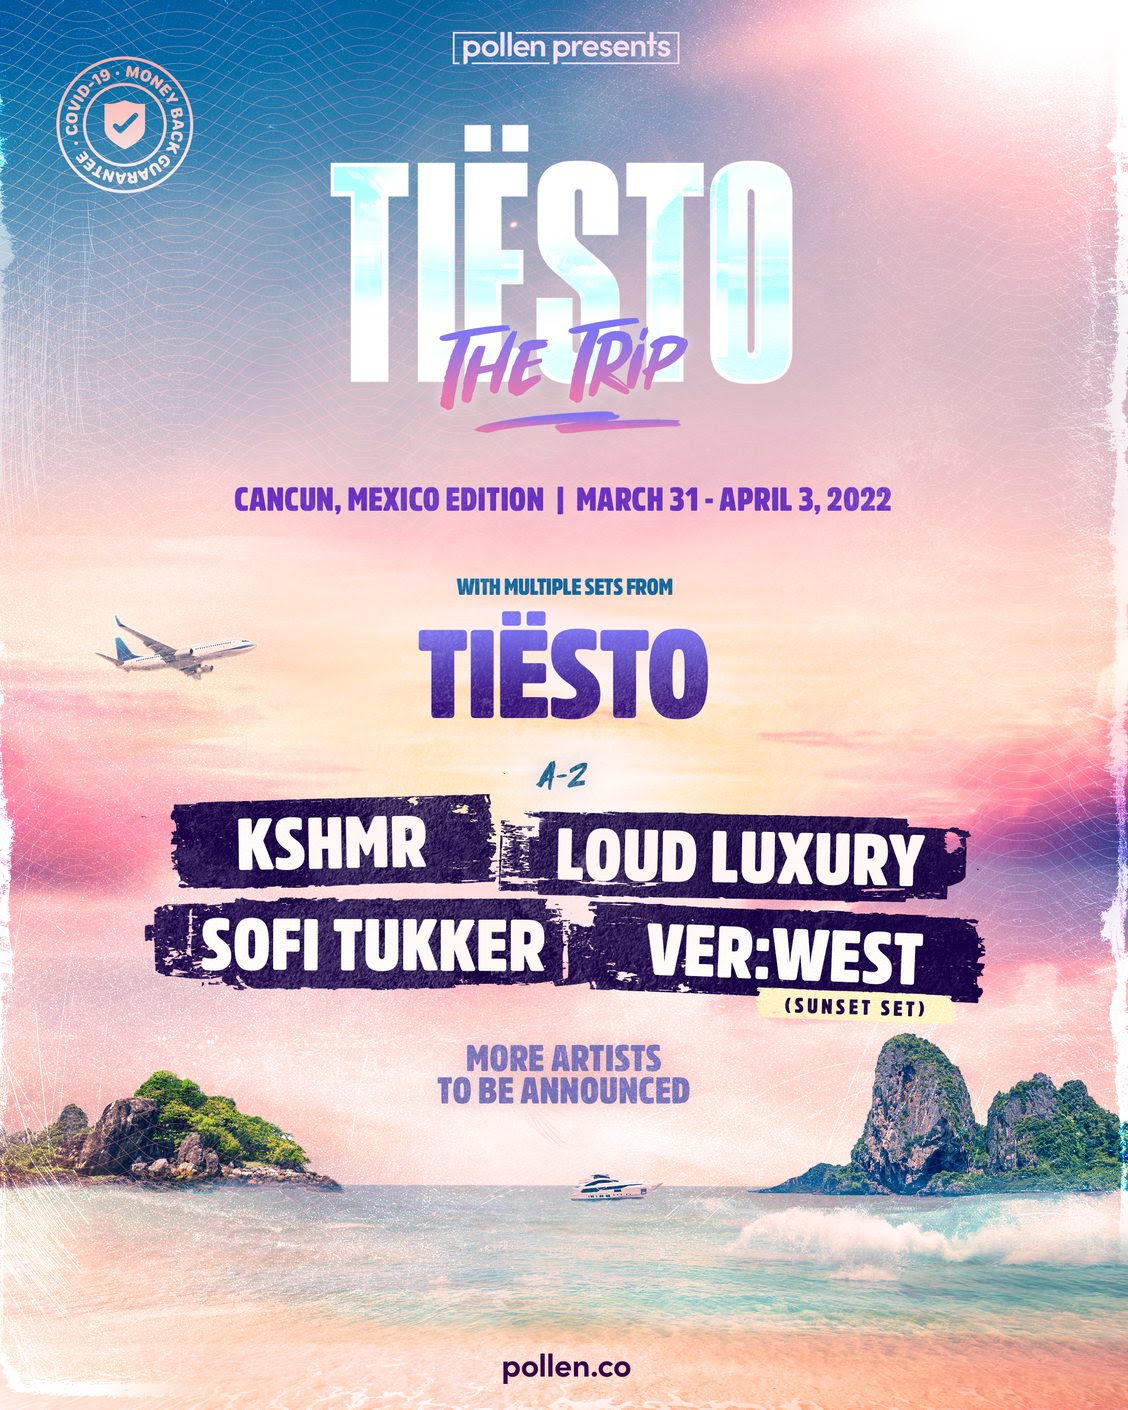 Tiësto announces new Cancún event, The Trip, with KSHMR, Sofi Tukker and moreBc297033 0c66 D117 8f2c 060c5a8b69bf.jpg?w=564&dpr=2